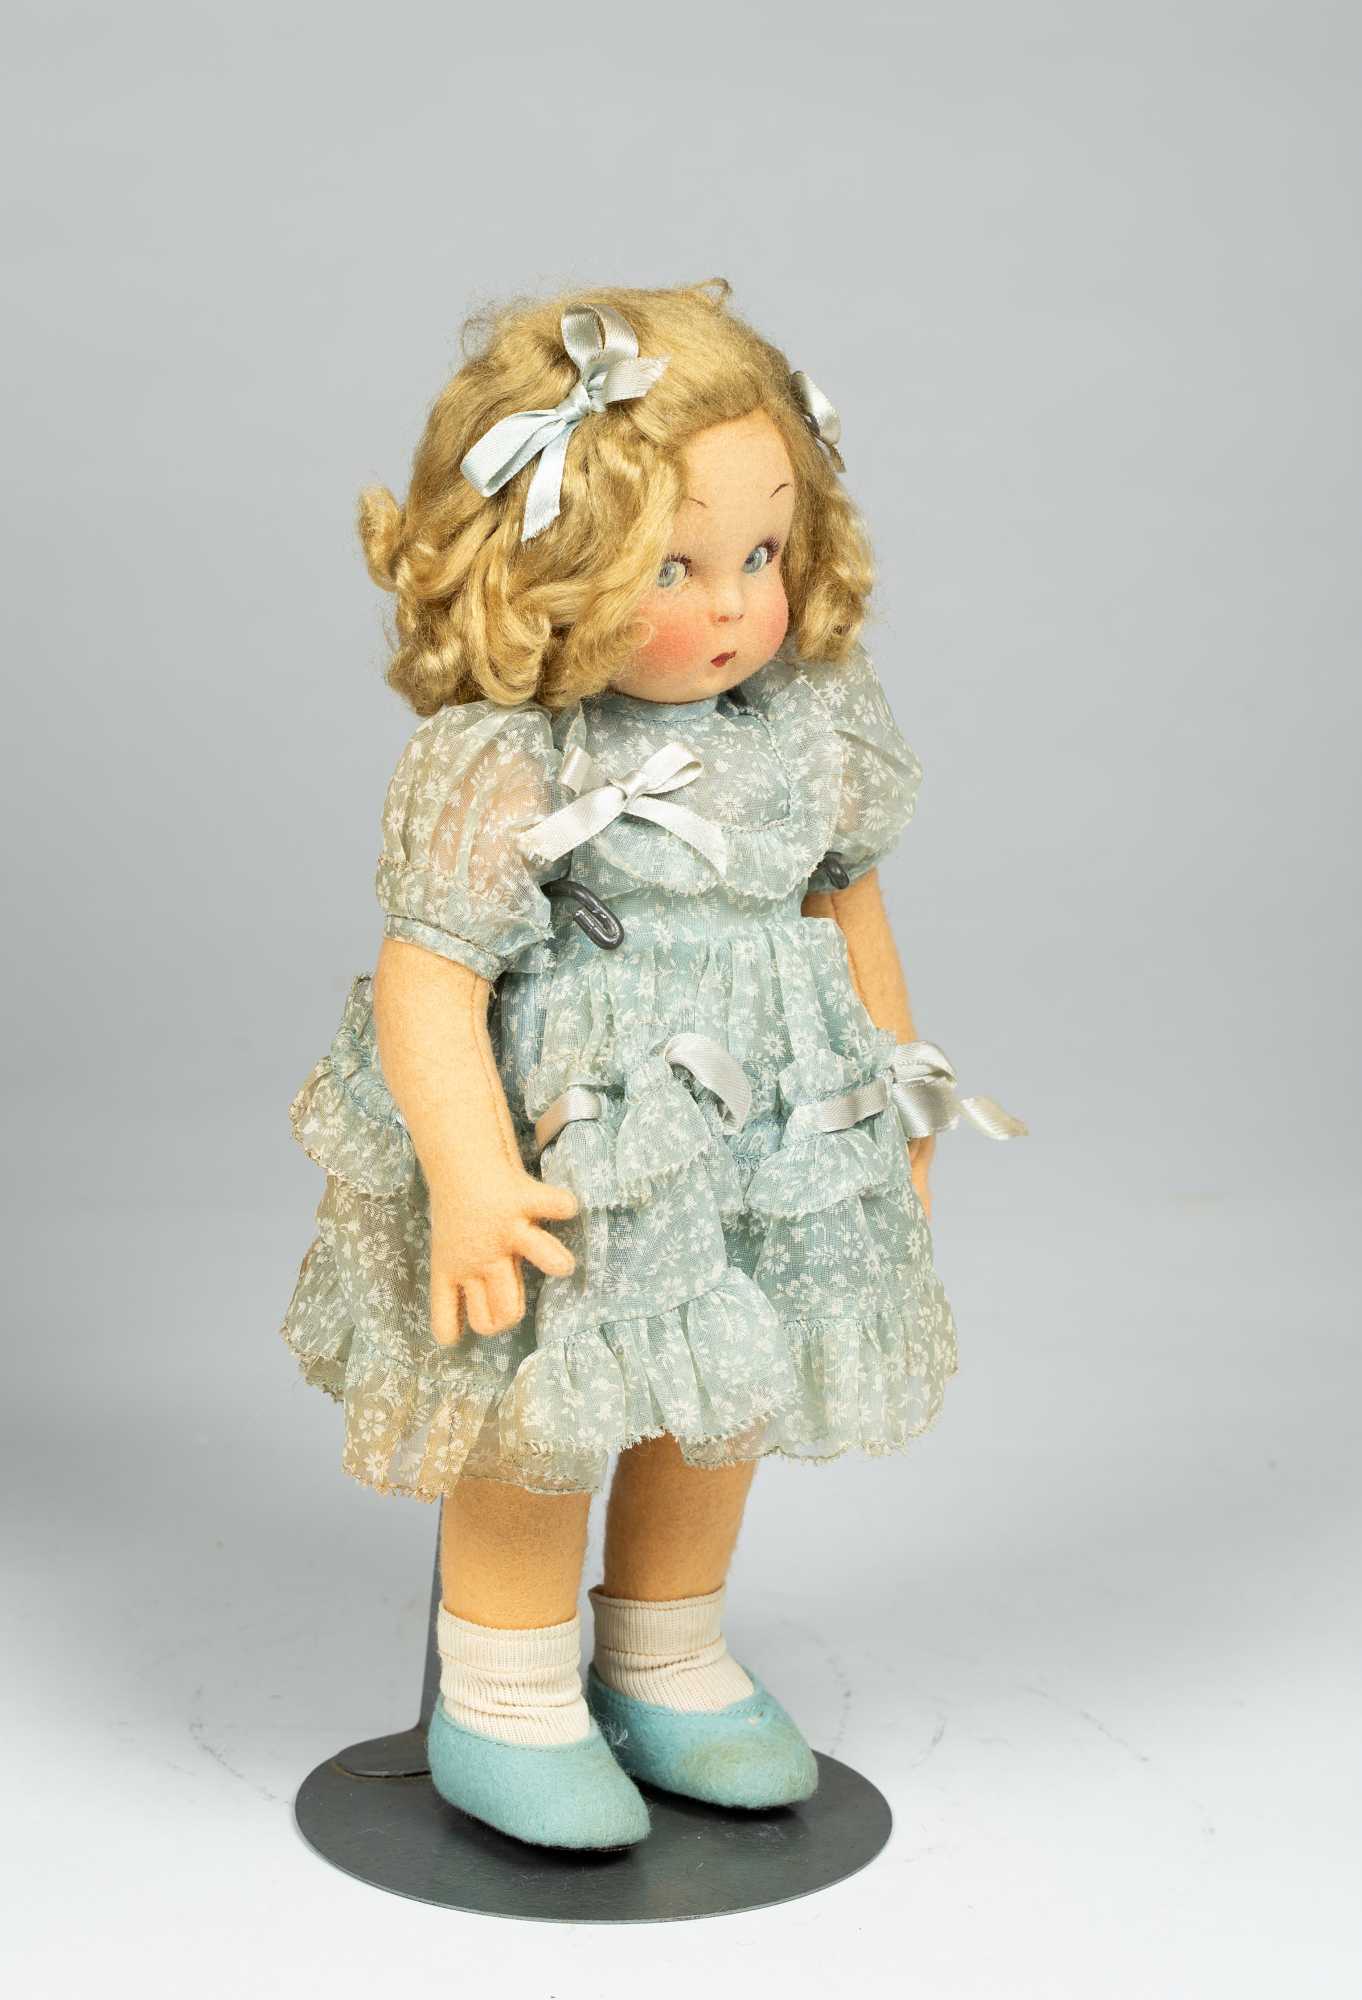 lenci dolls for sale